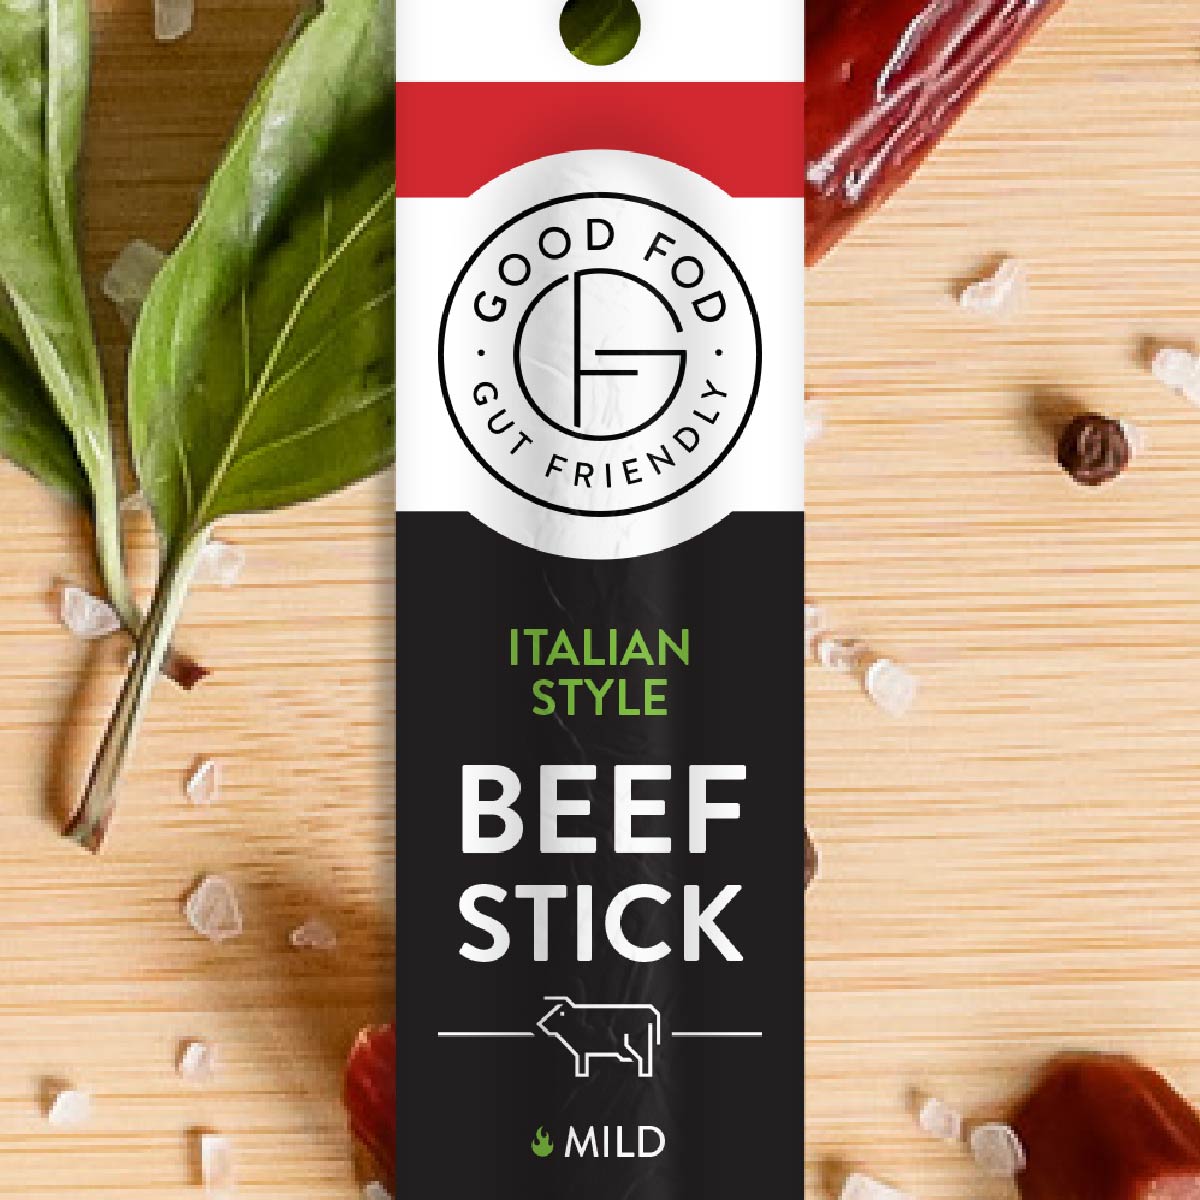 Good Fod Italian Style Meat Stick 1-10ct